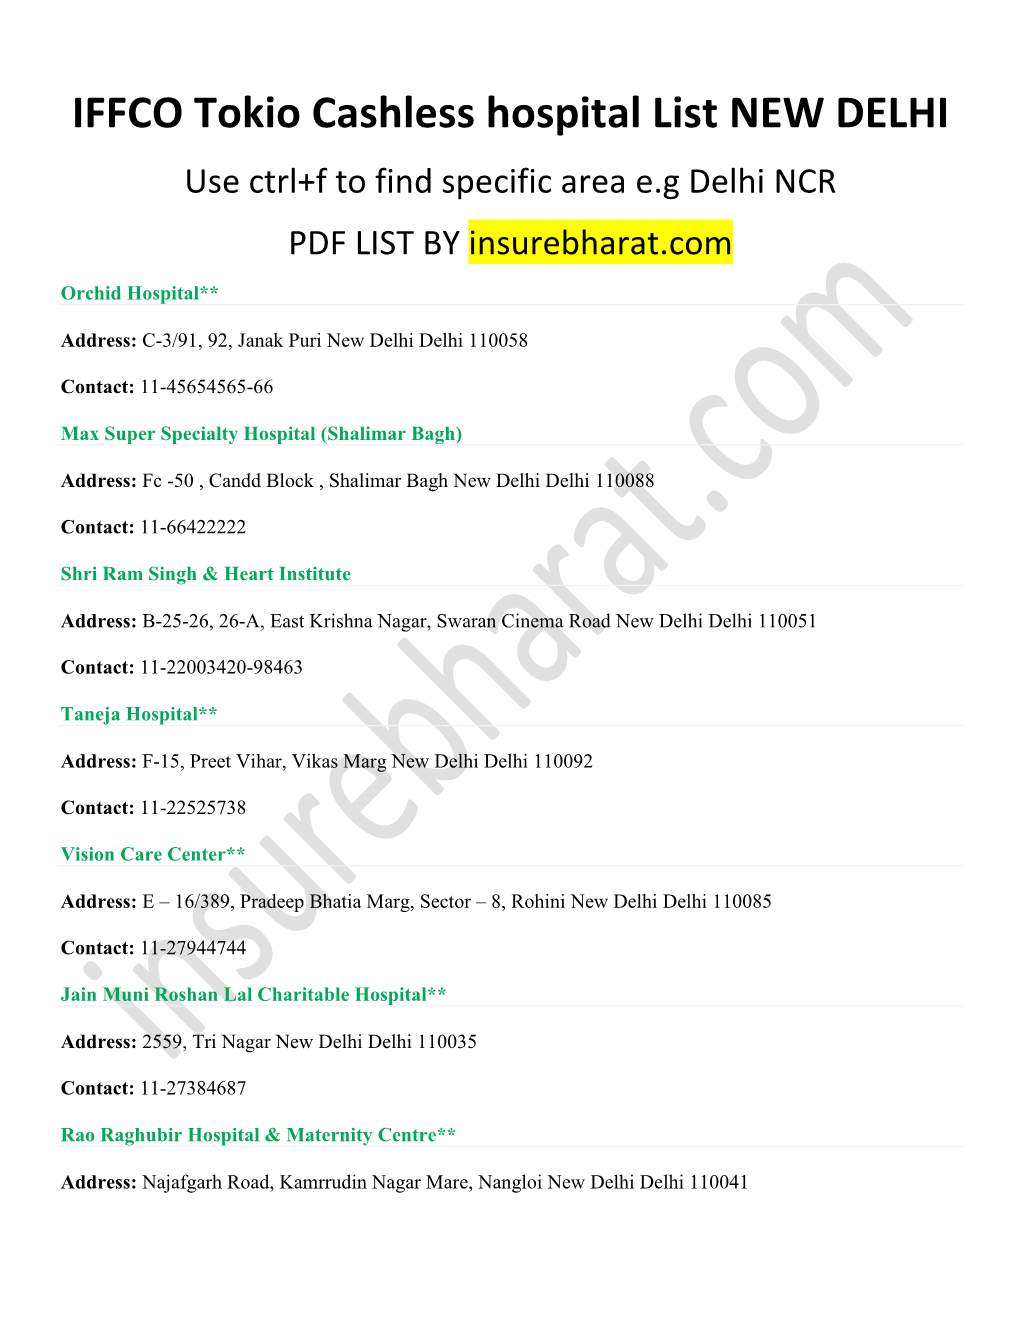 IFFCO Tokio Cashless Hospital List NEW DELHI Use Ctrl+F to Find Specific Area E.G Delhi NCR PDF LIST by Insurebharat.Com